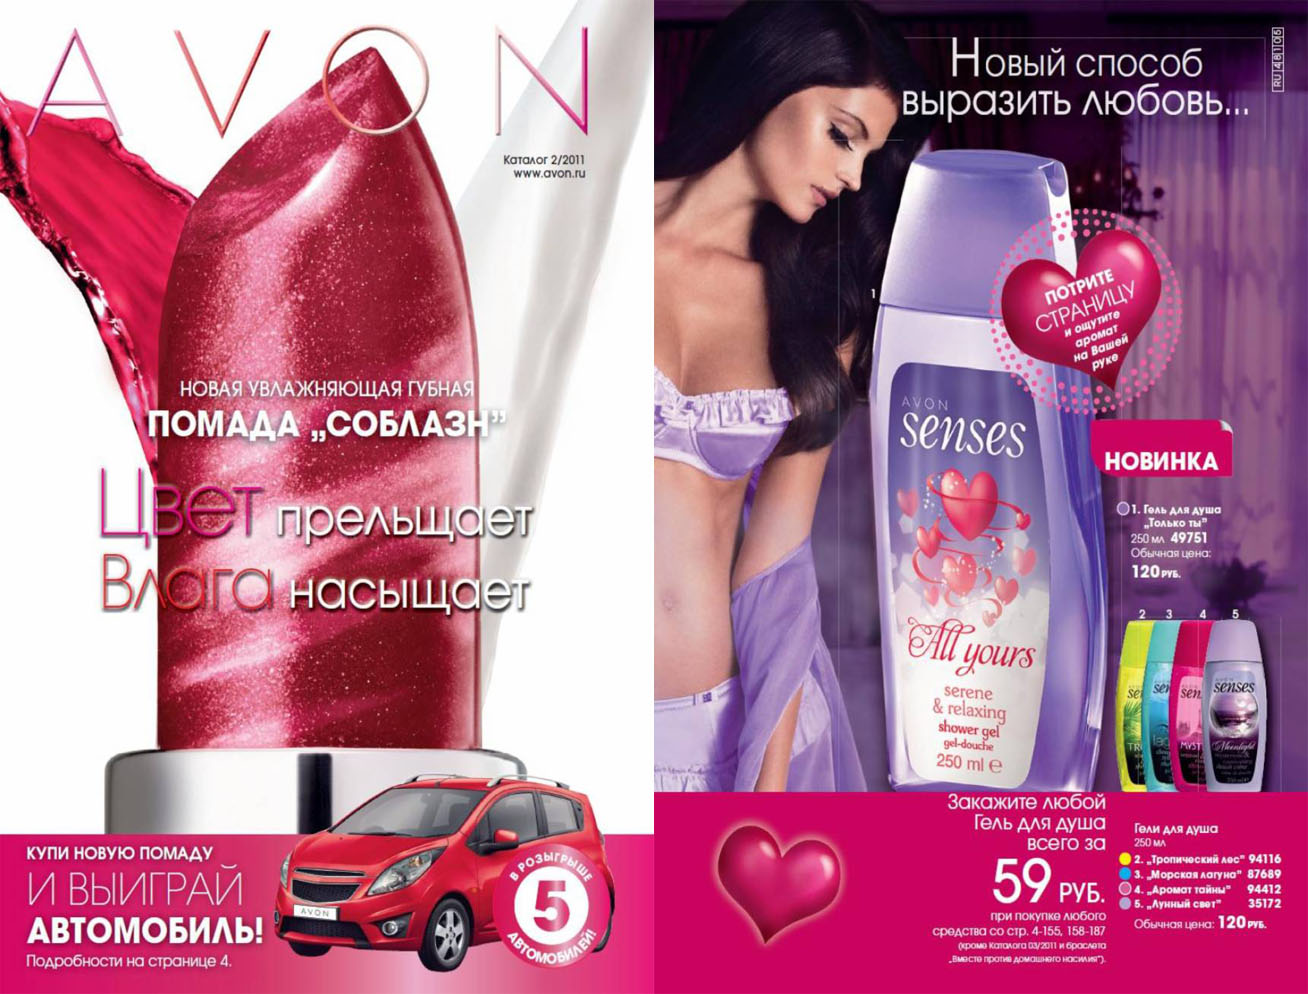 Avon 6 2011 каталог купить косметику эвелин интернет магазин